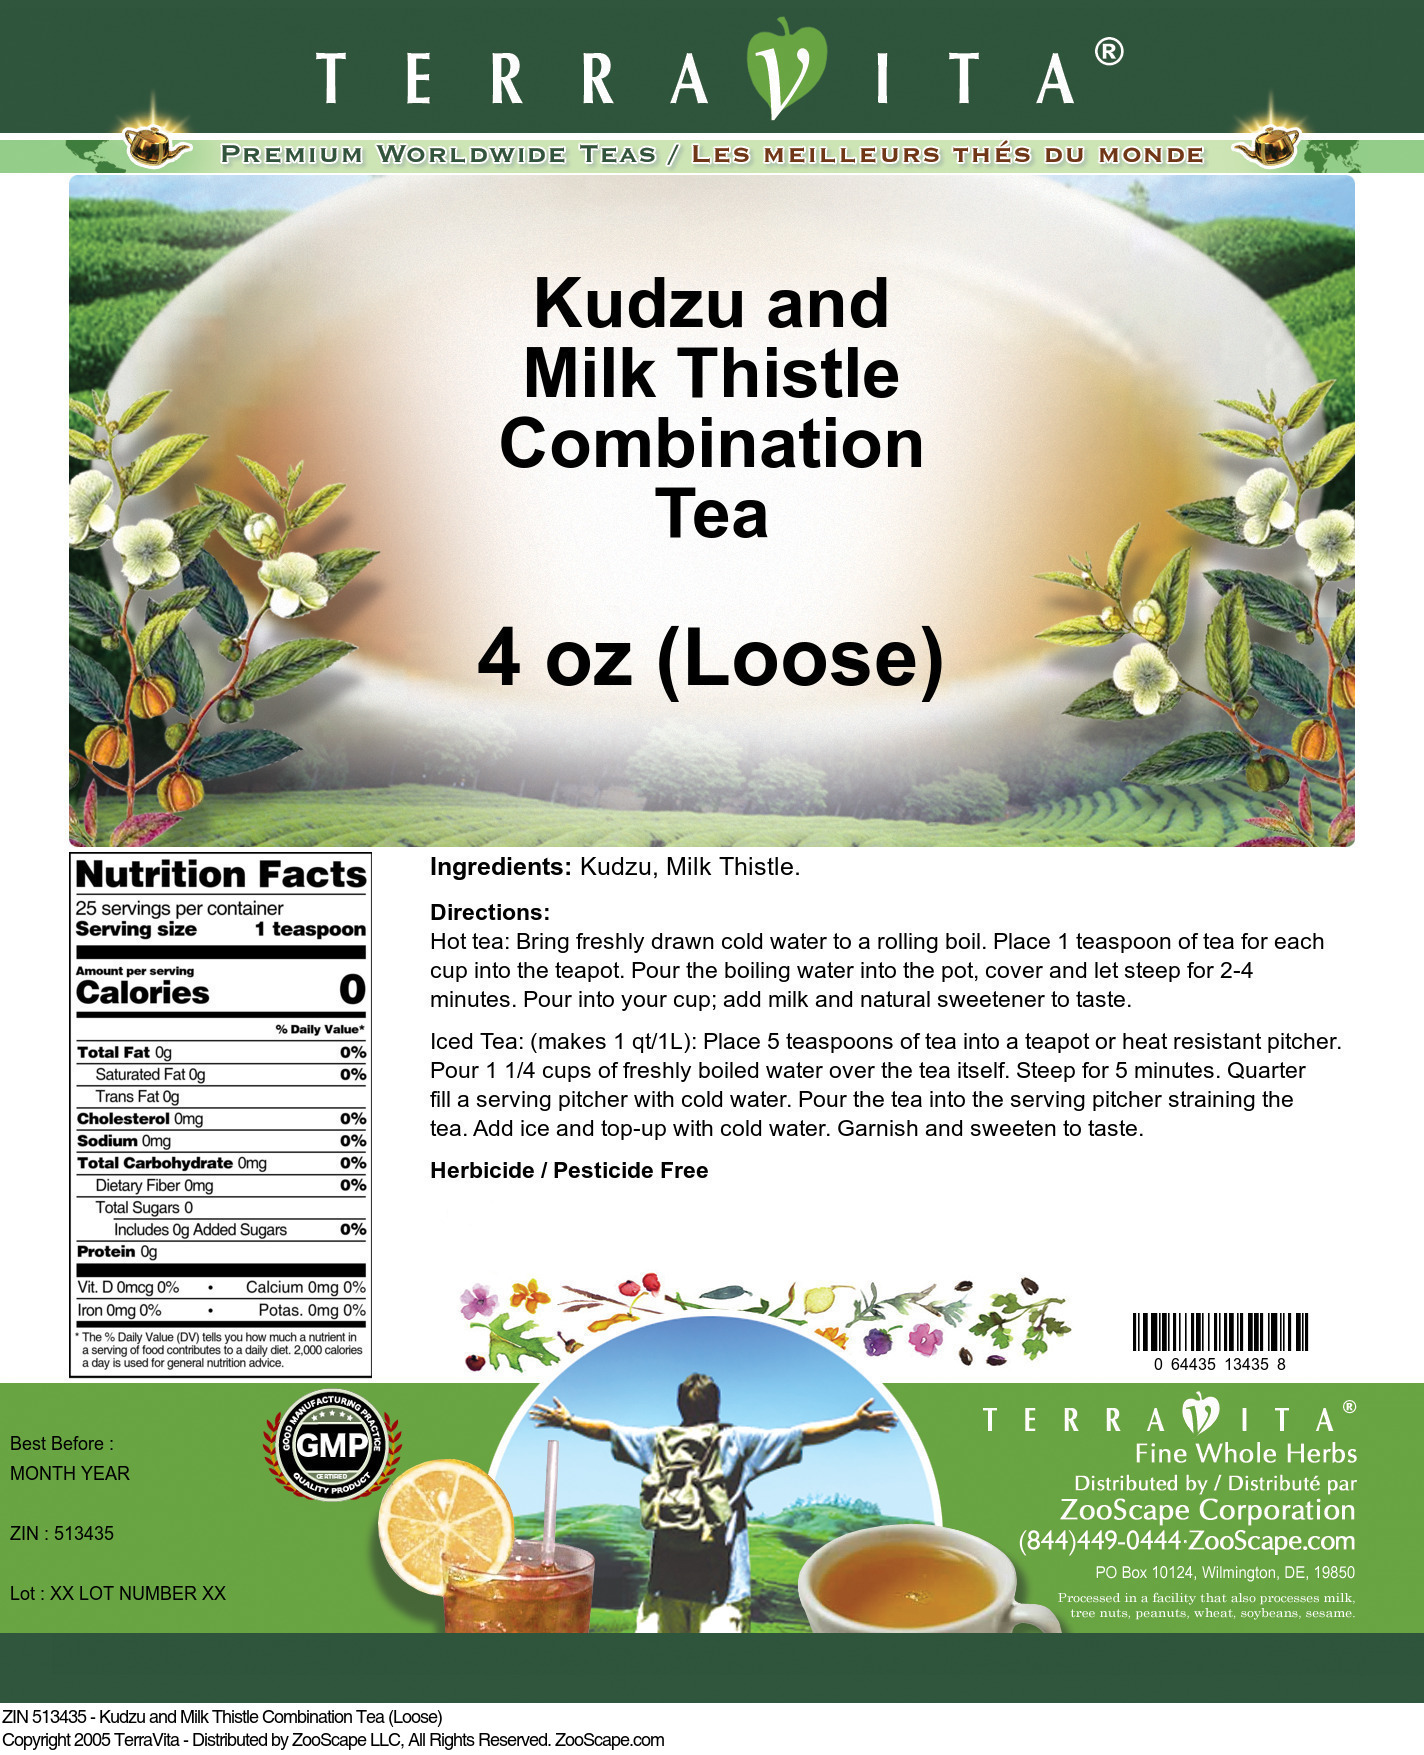 Kudzu and Milk Thistle Combination Tea (Loose) - Label